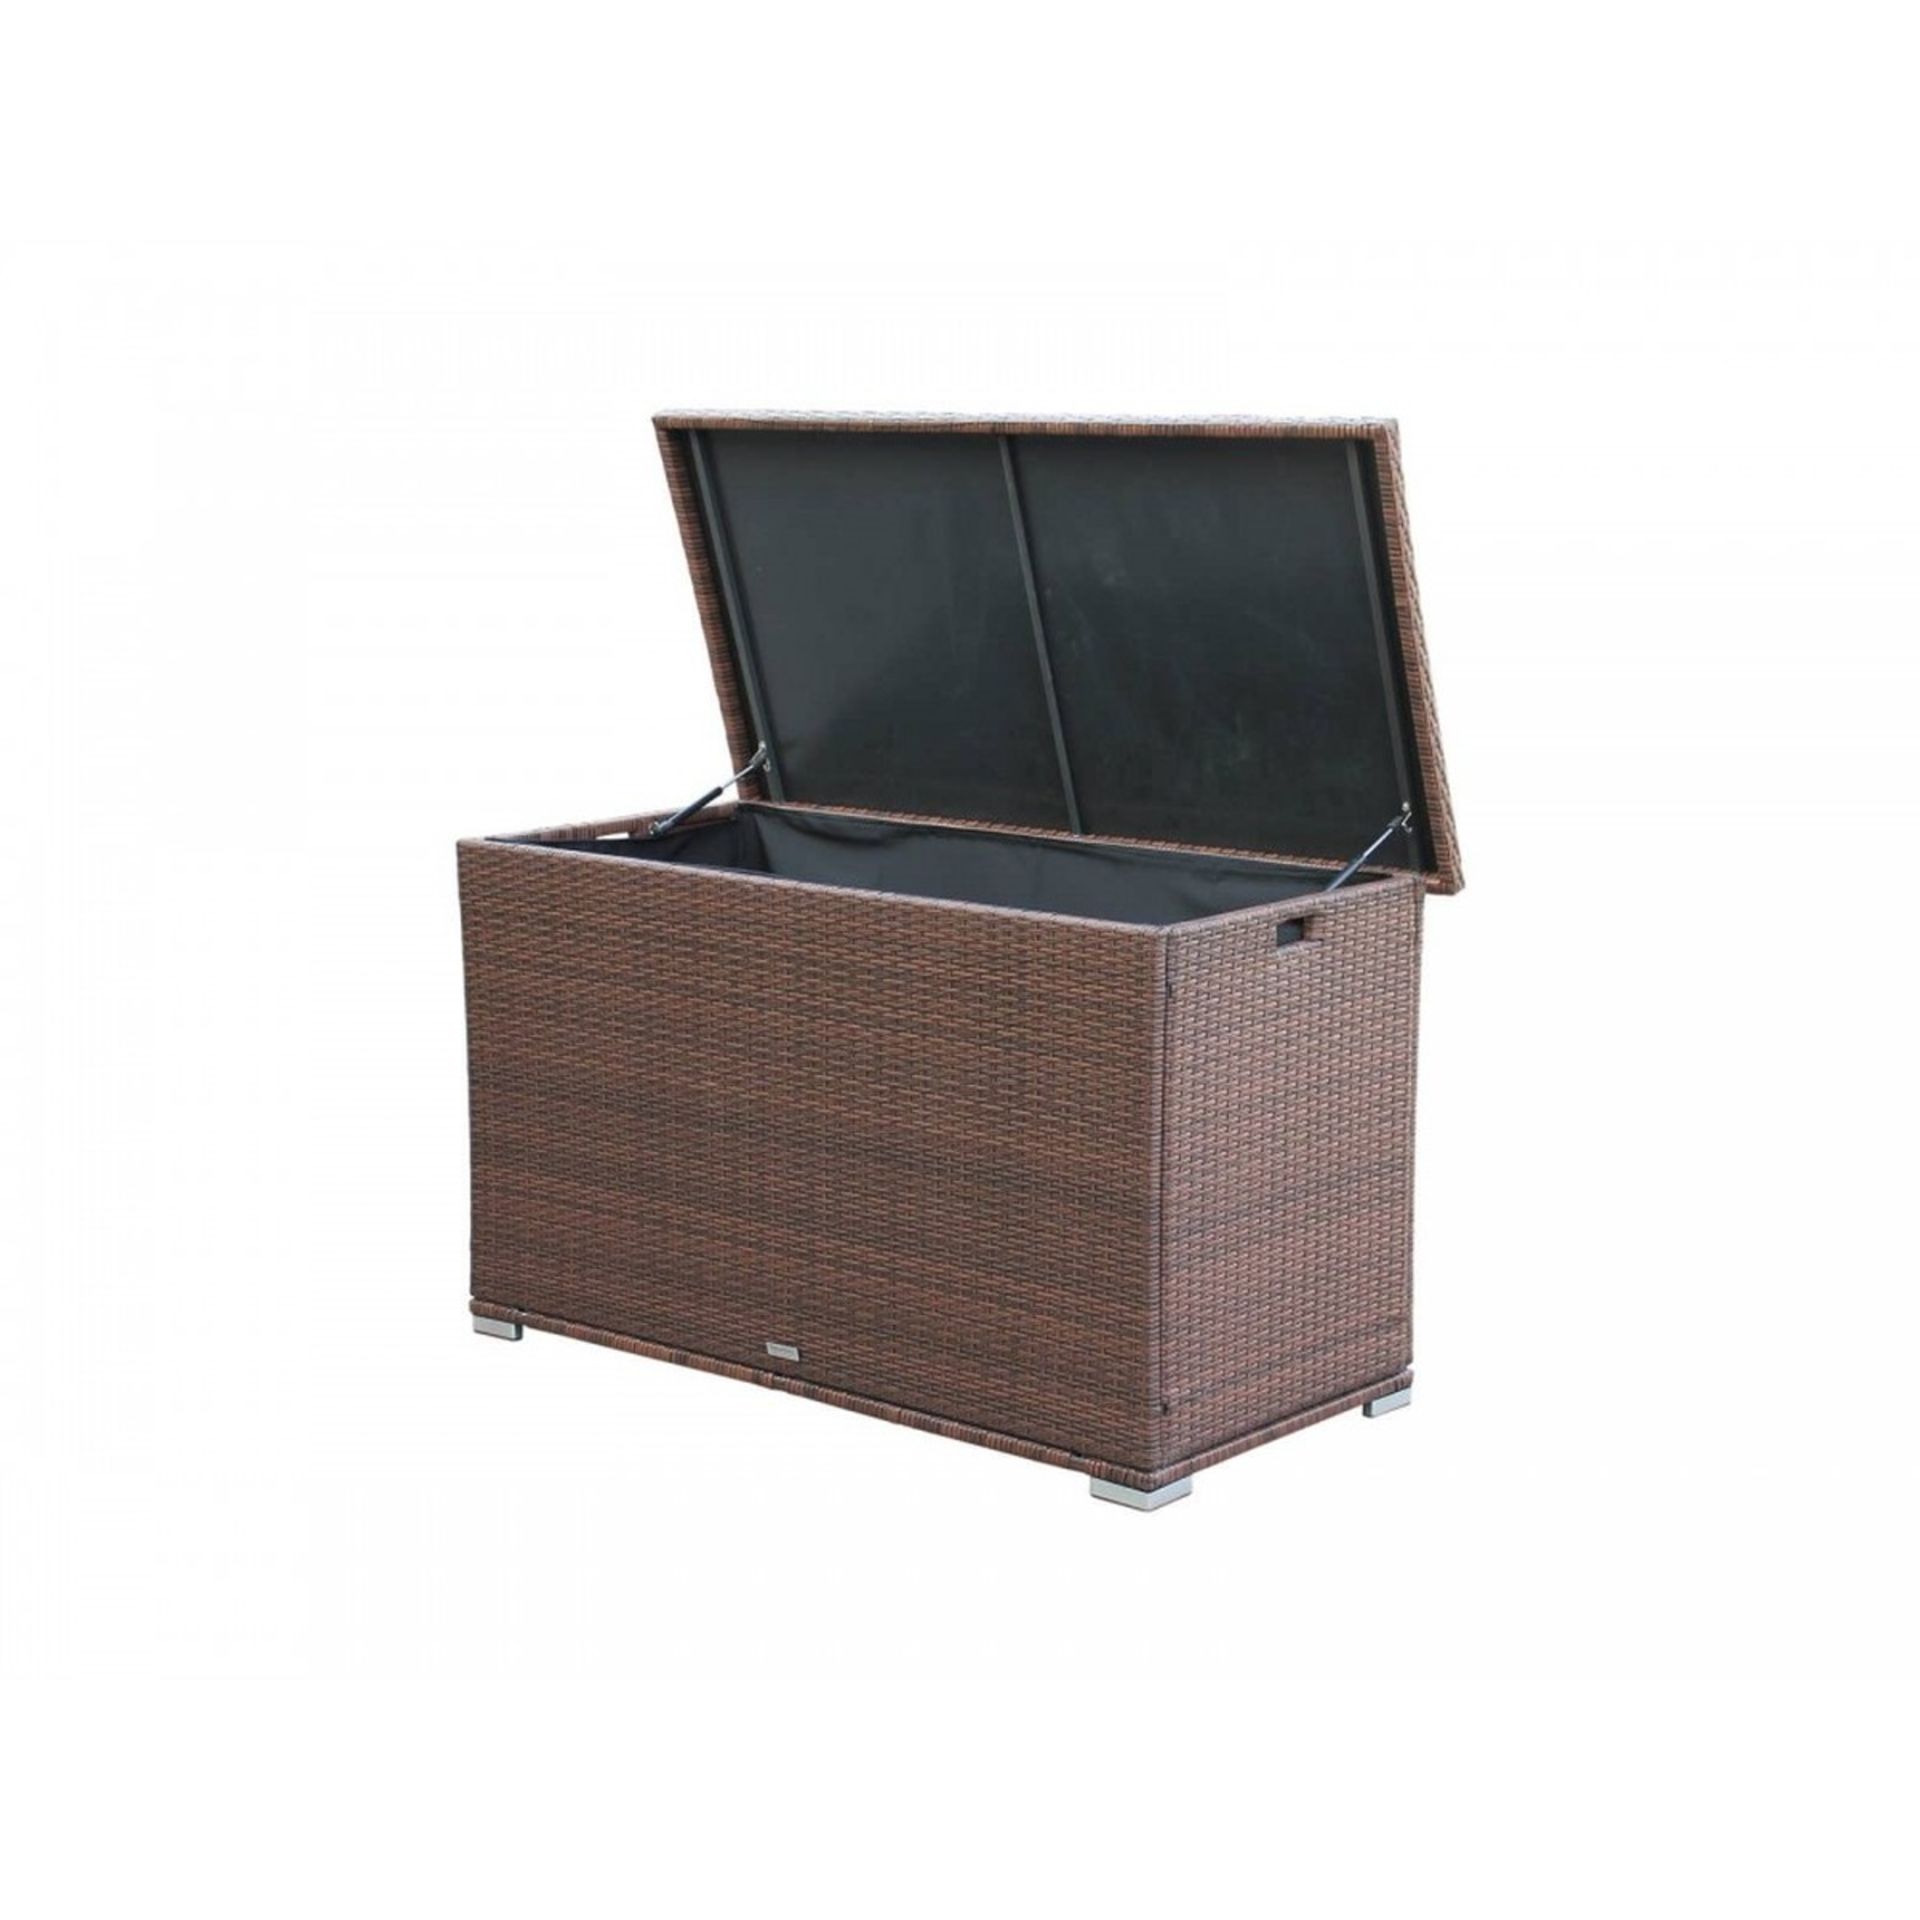 Brand New Luxury Storage Box. Gorgeous all-weather rattan storage box. - Image 3 of 3